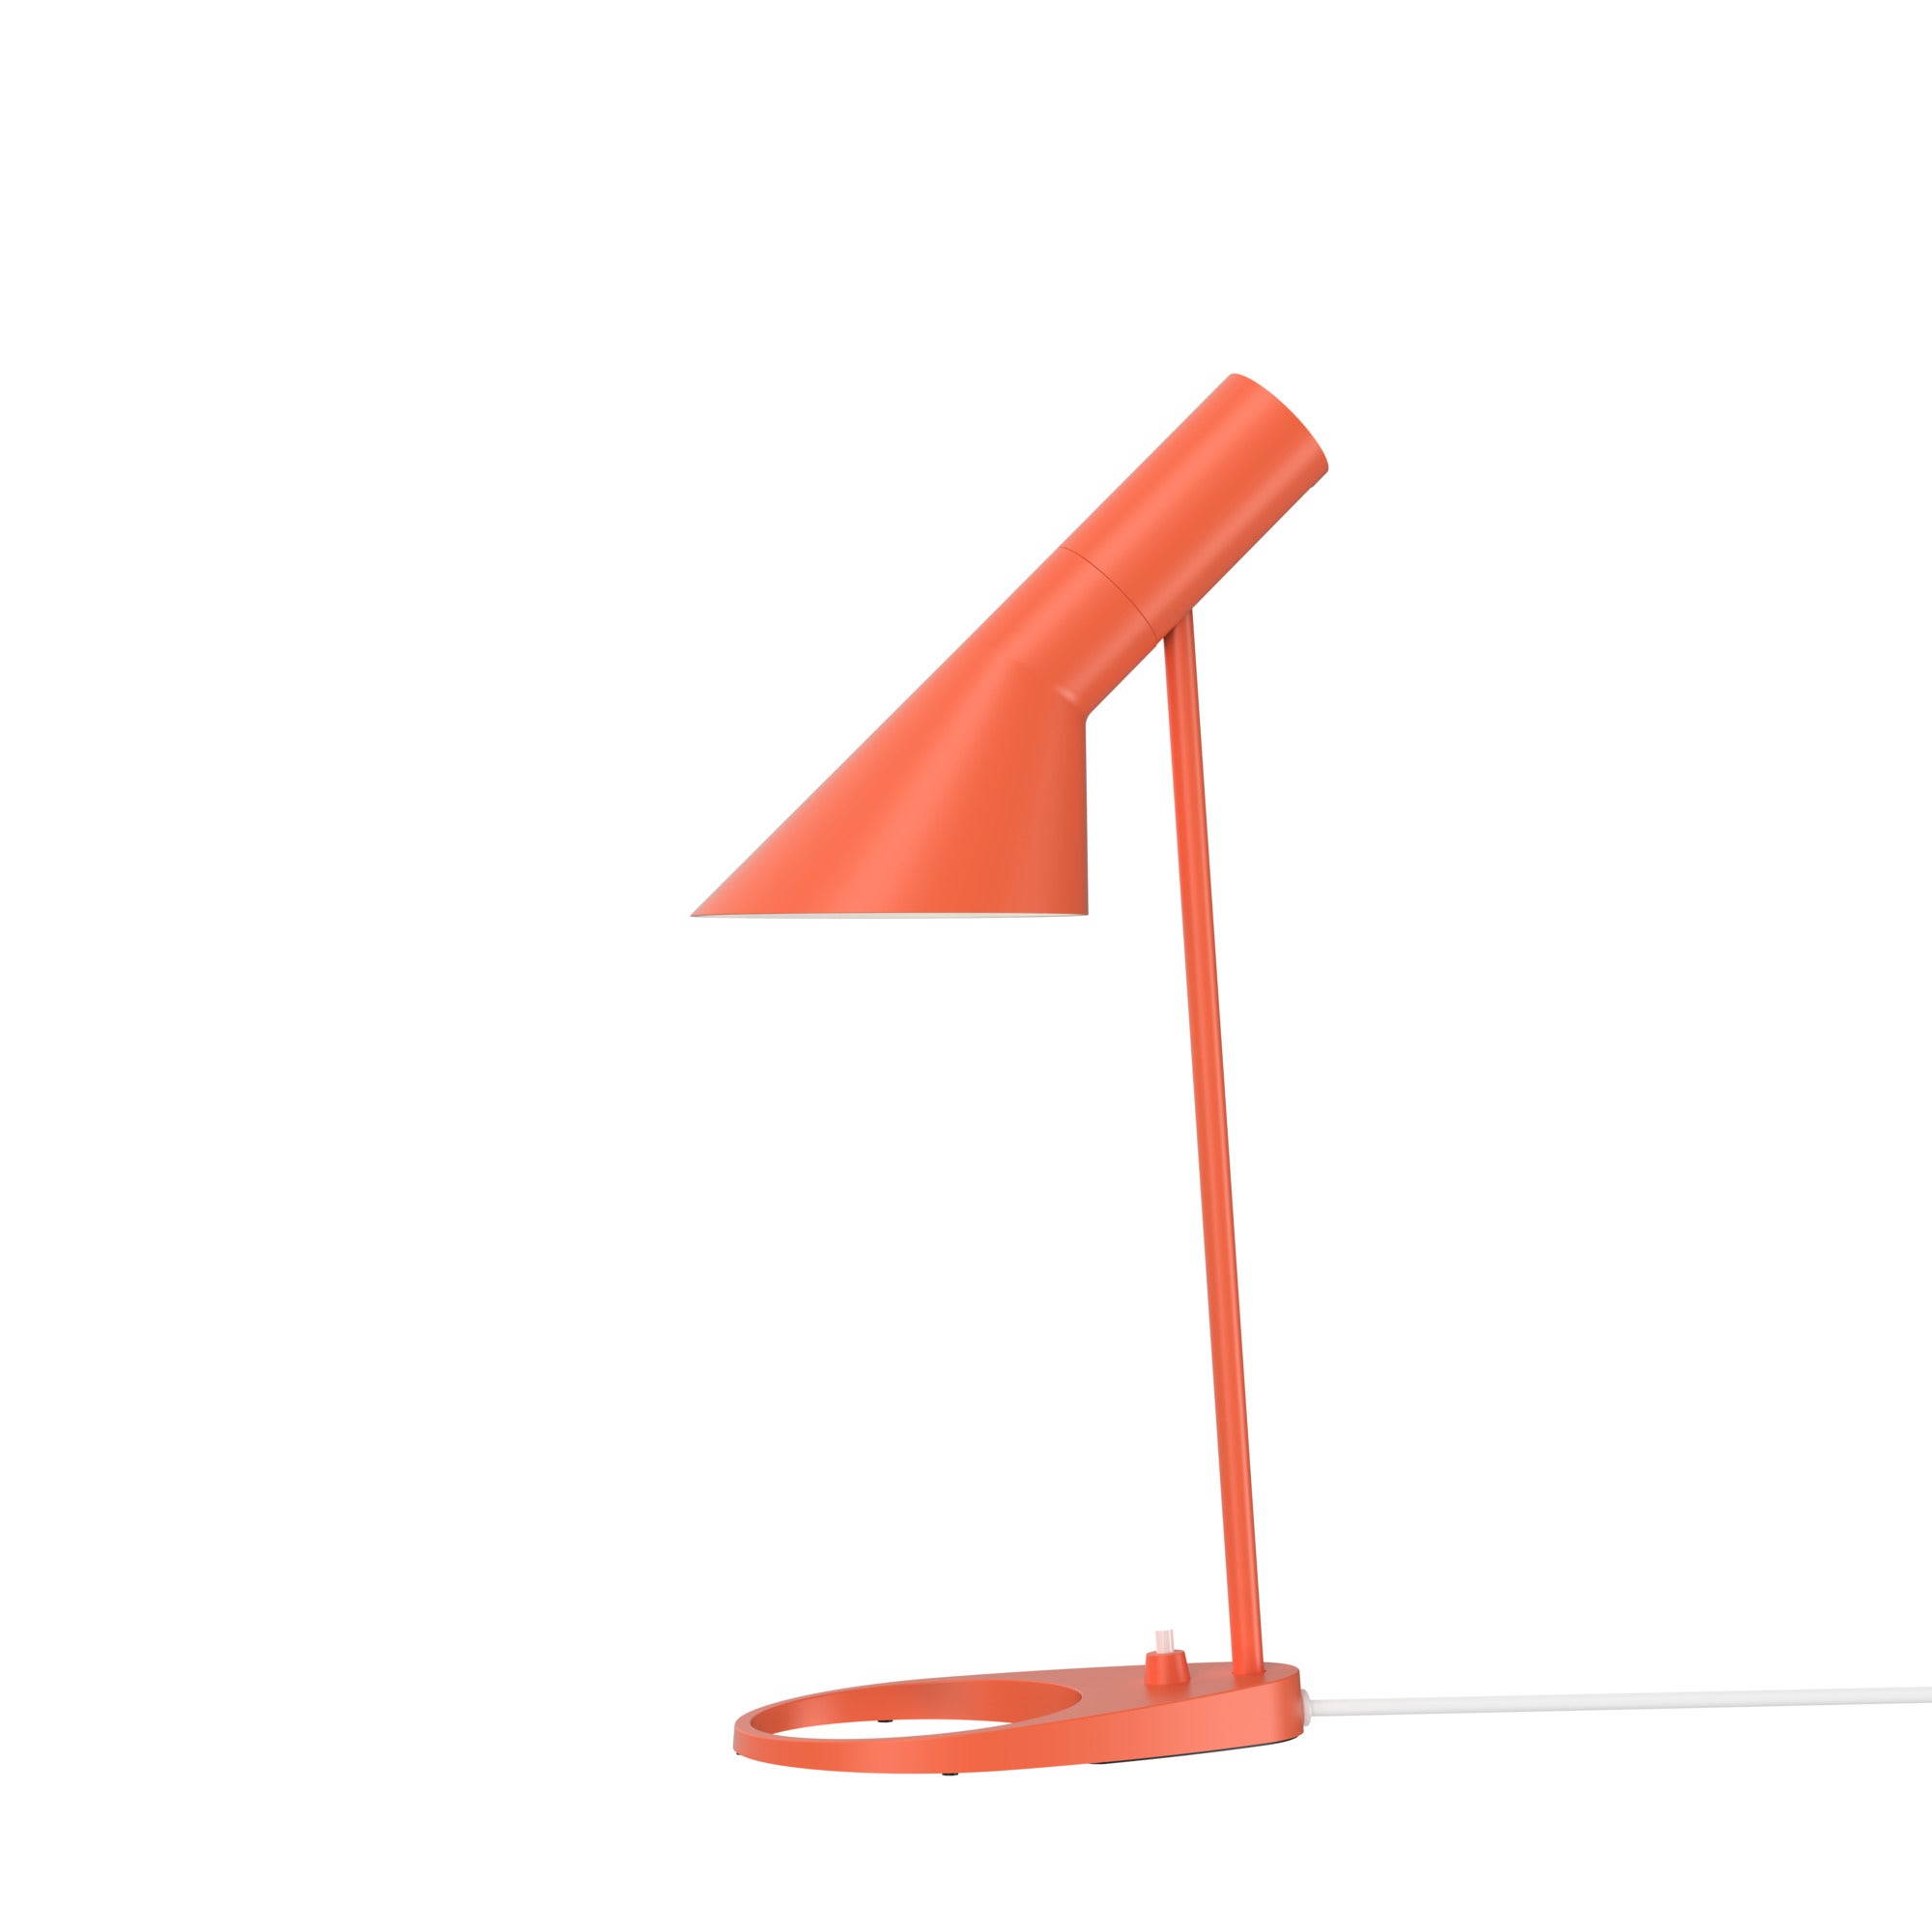 Arne Jacobsen 'Aj Mini' Table Lamp in Electric Orange for Louis Poulsen